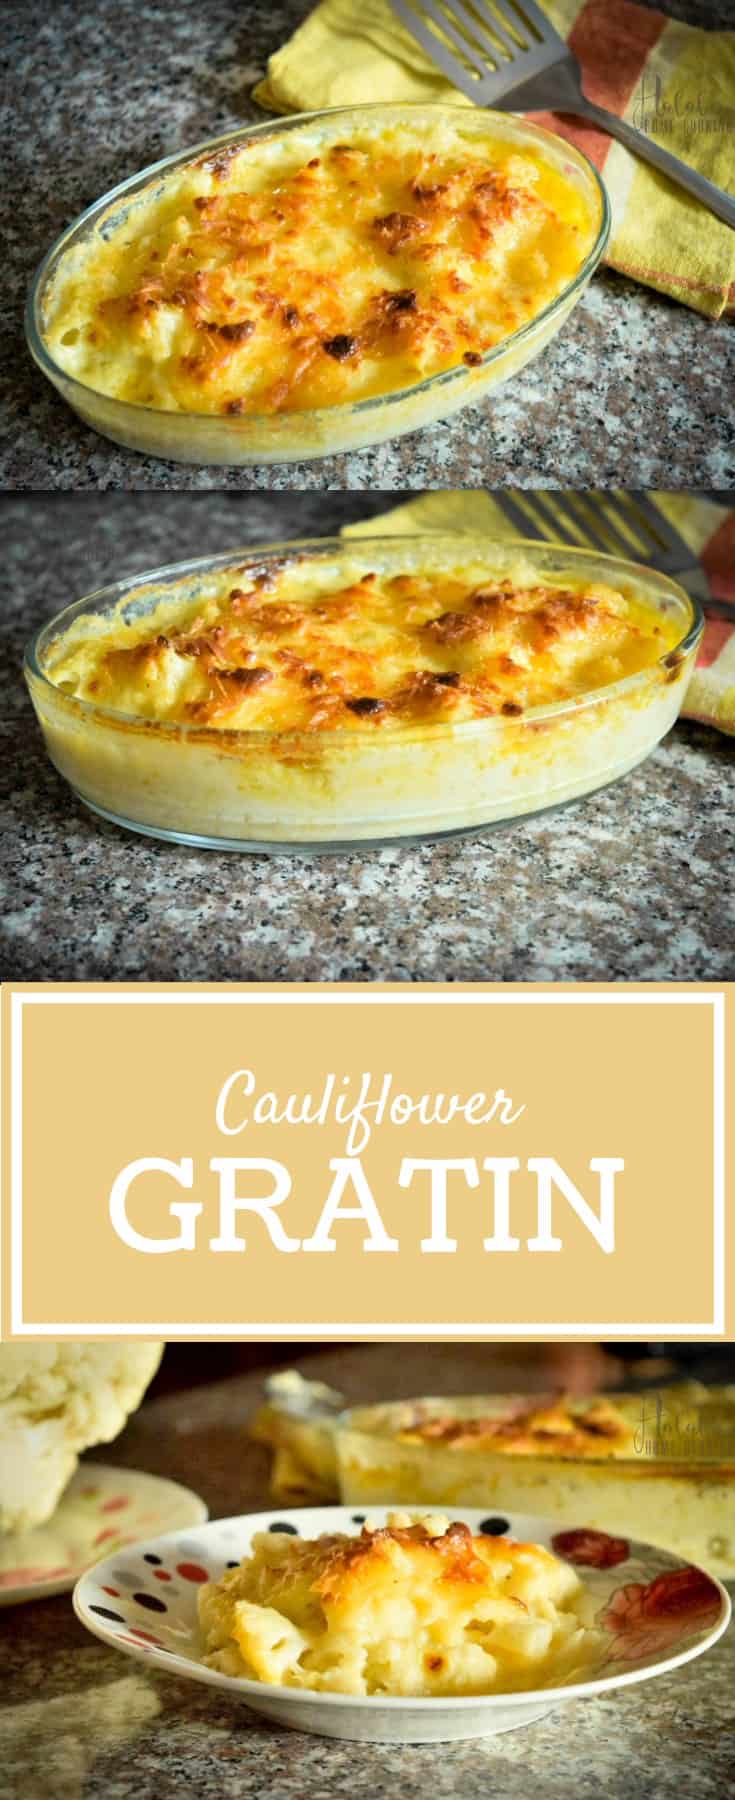 cauliflower-gratin-recipe-pinterest-1